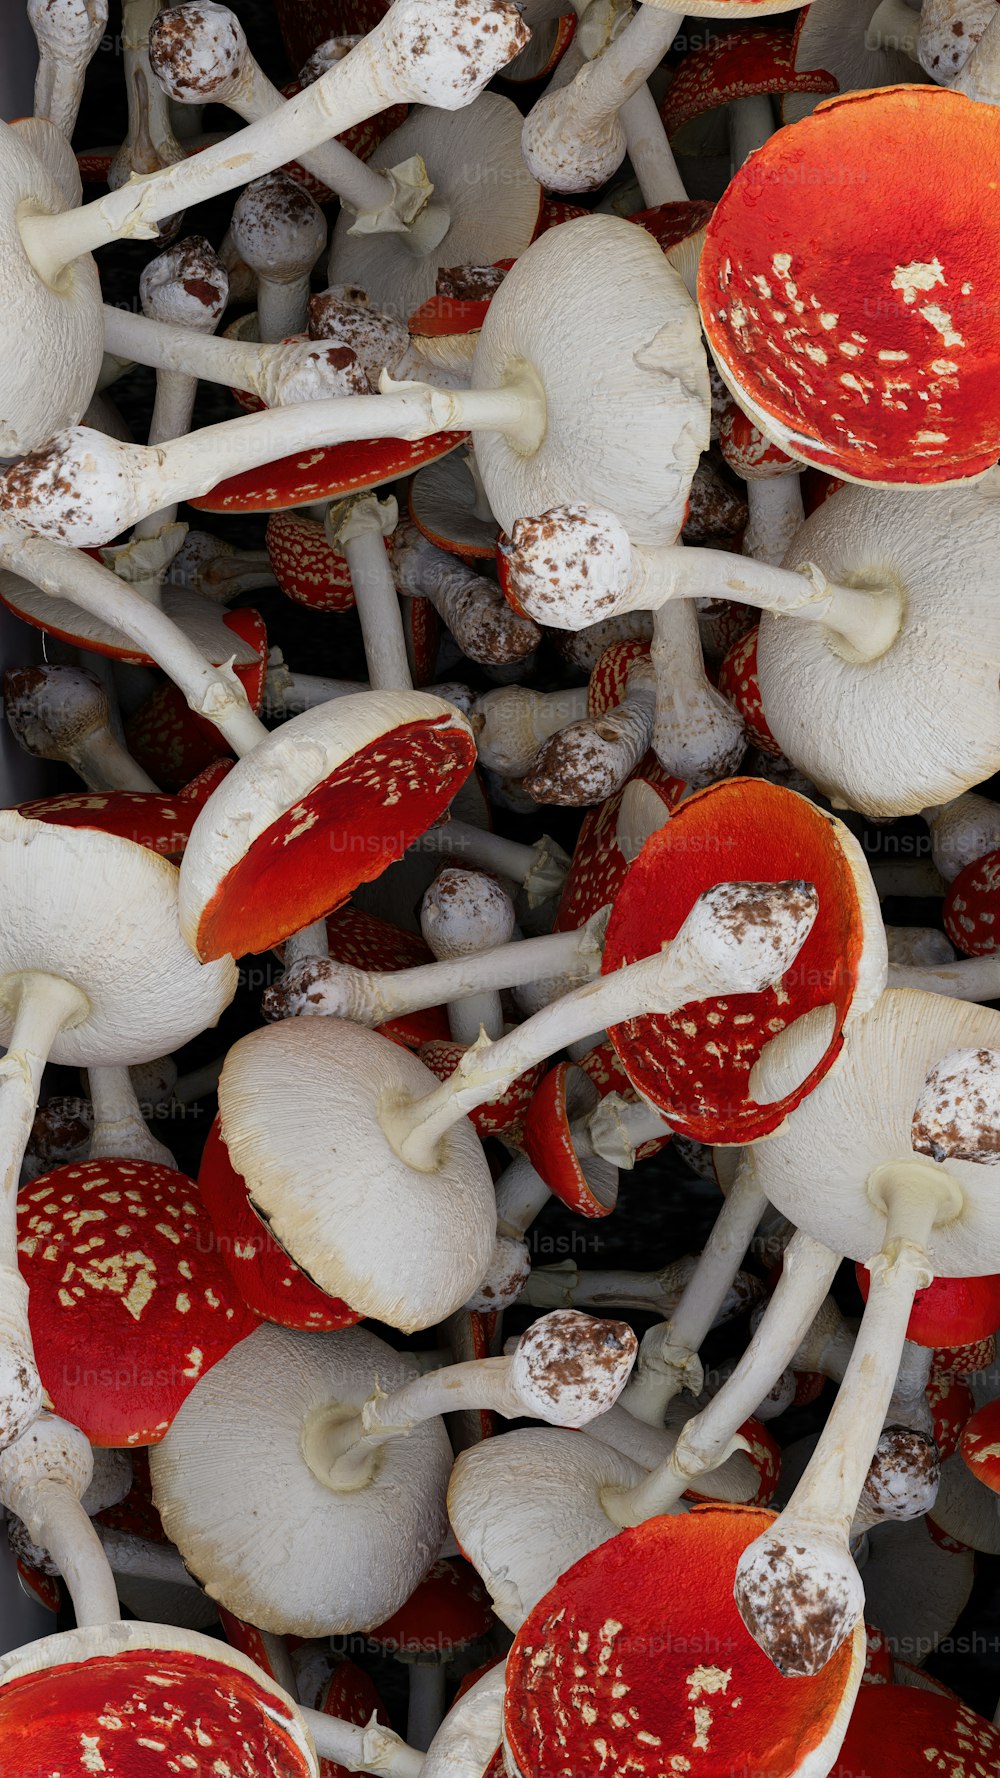 500+ Mushroom Pictures [HD] | Download Free Images on Unsplash